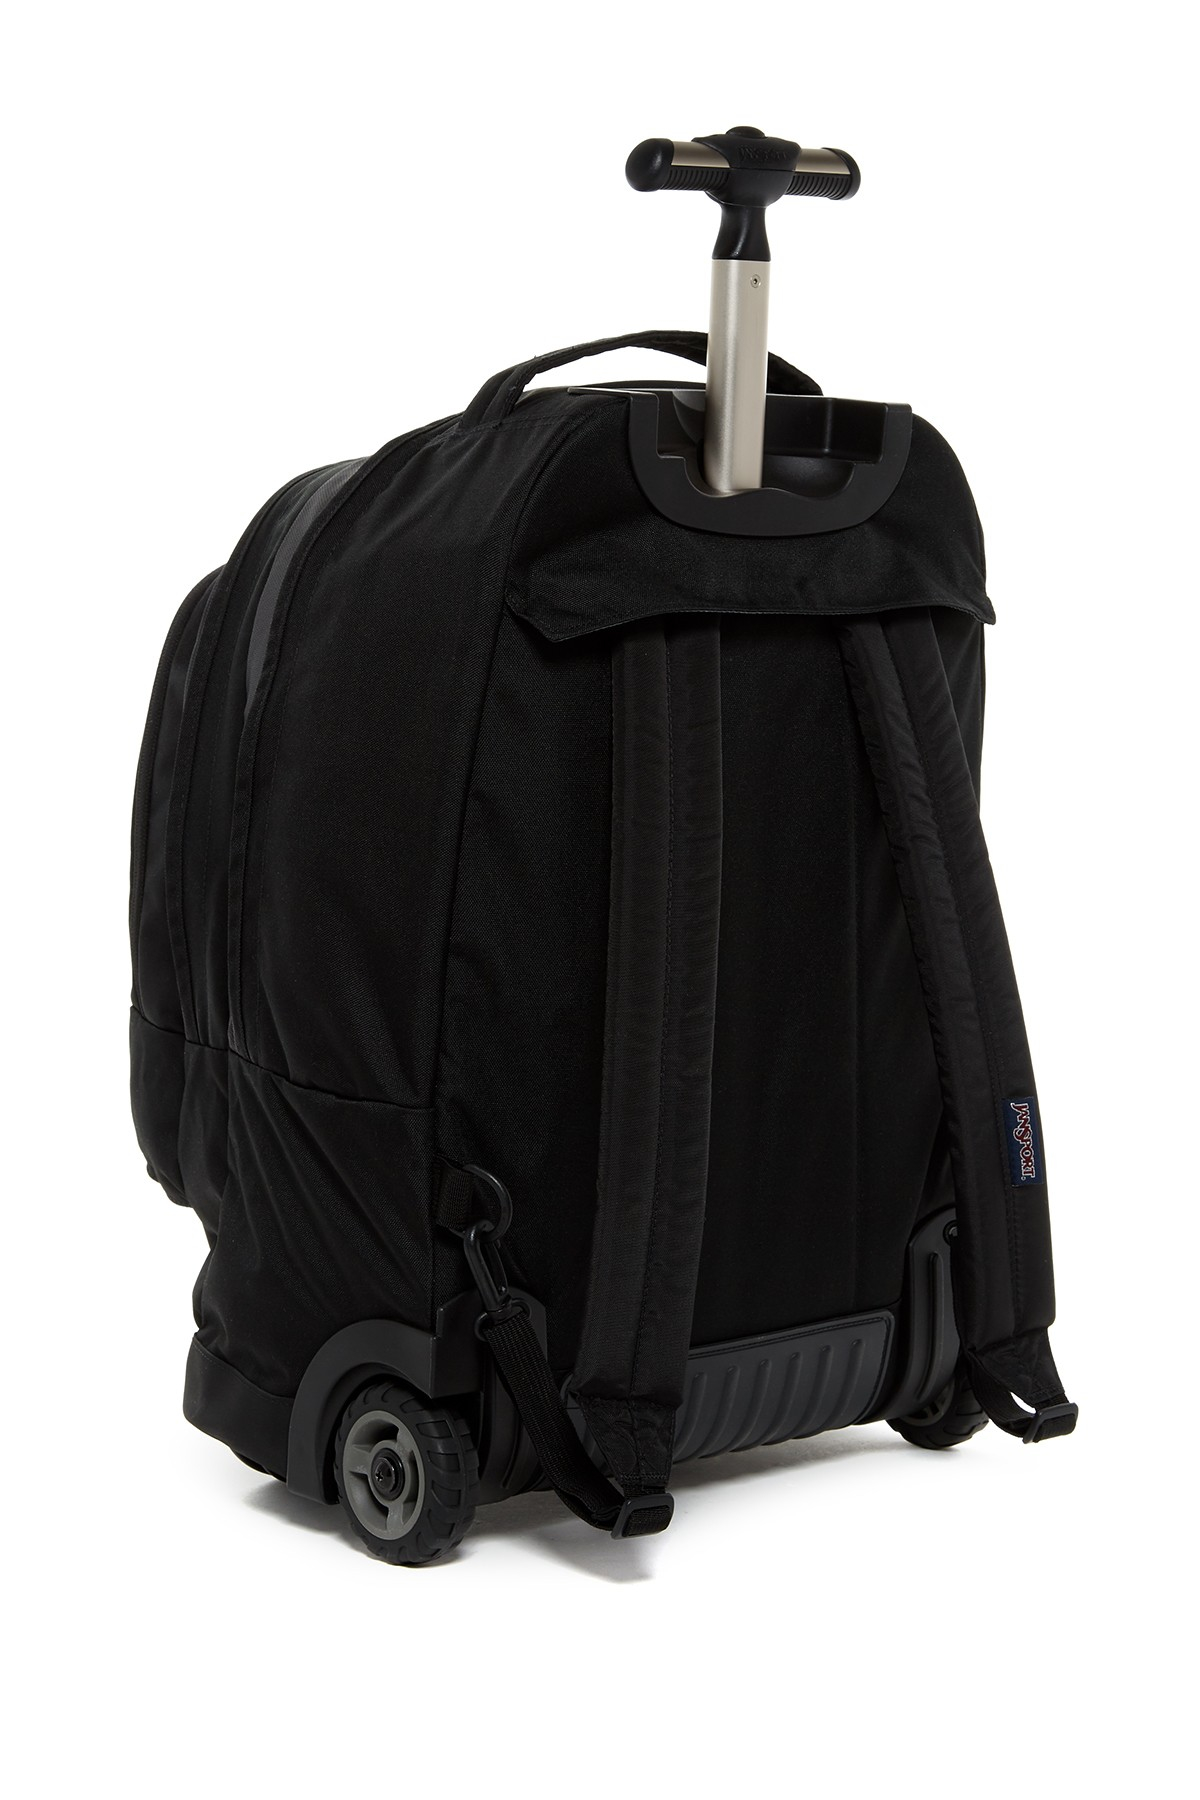 Lyst - Jansport Driver 8 Rolling Backpack in Black